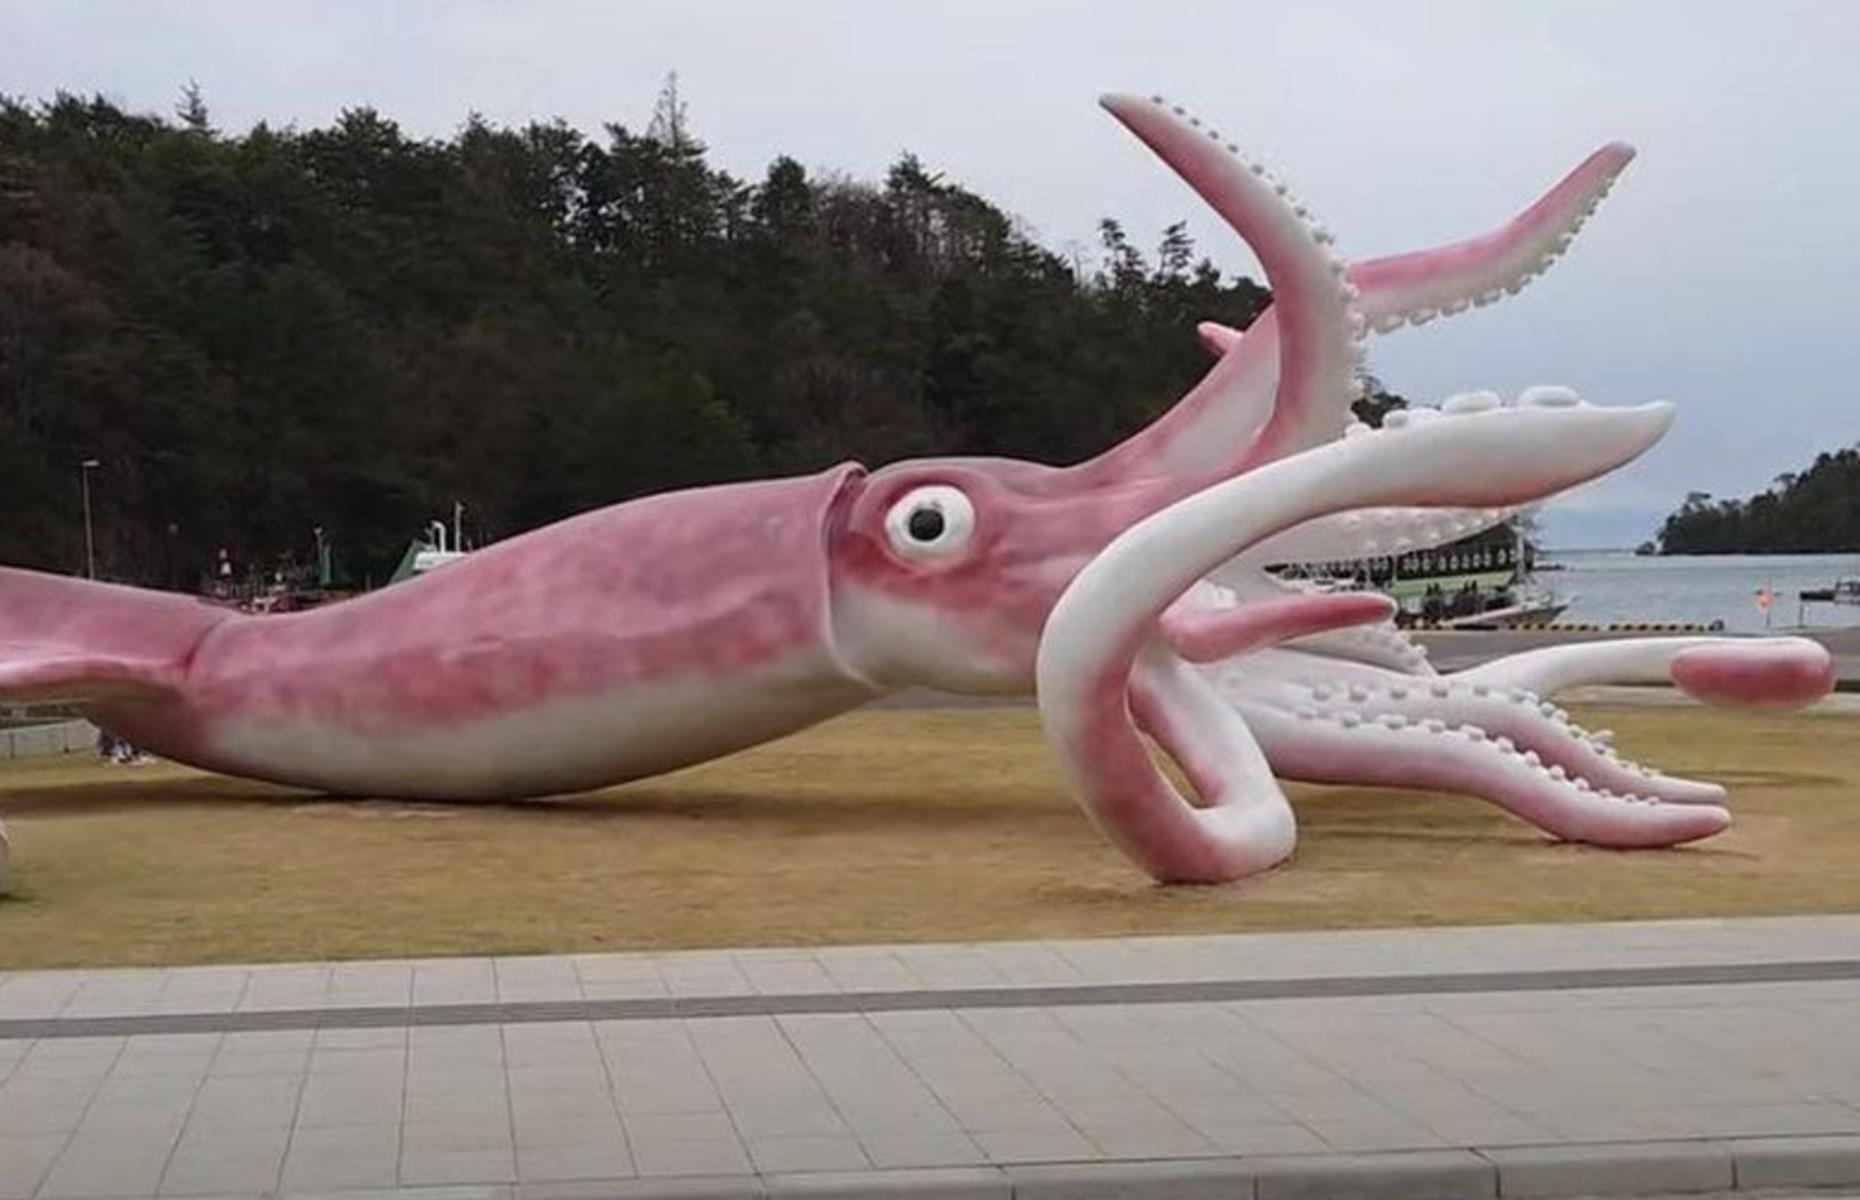 Japan: A squid statue – $230,000 (£165k)